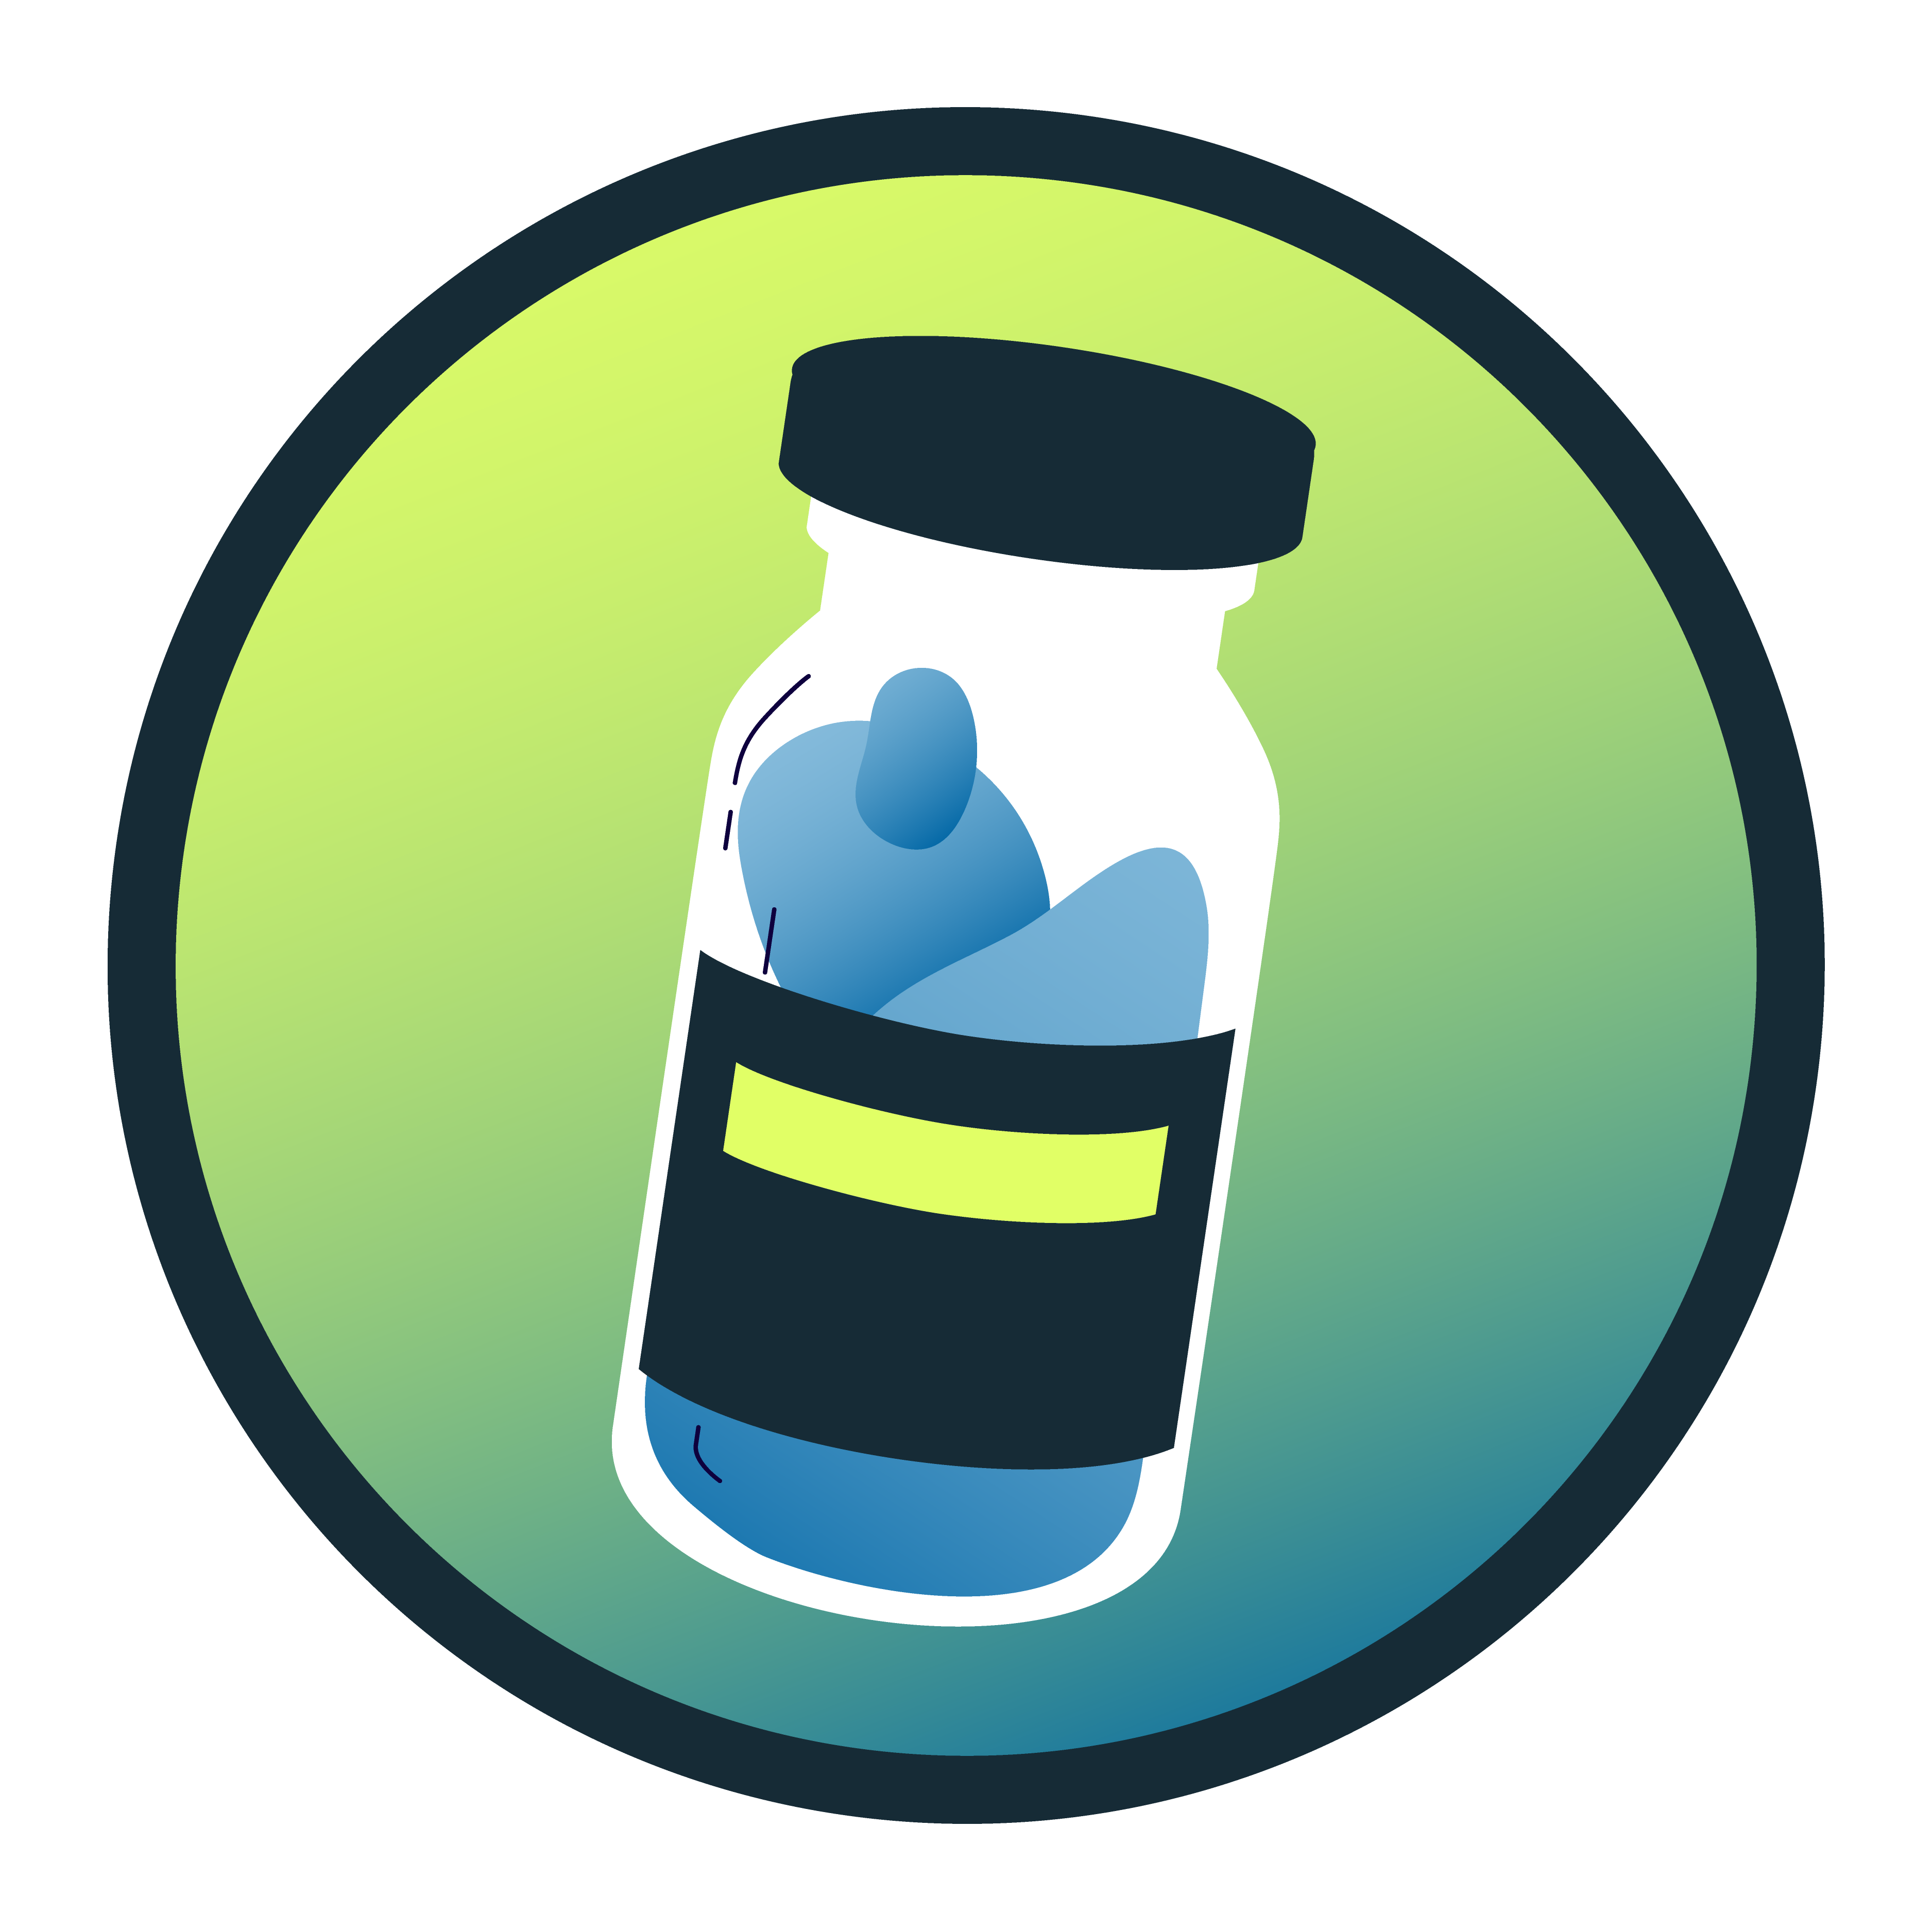 Stylized illustration of a medicine or pill bottle